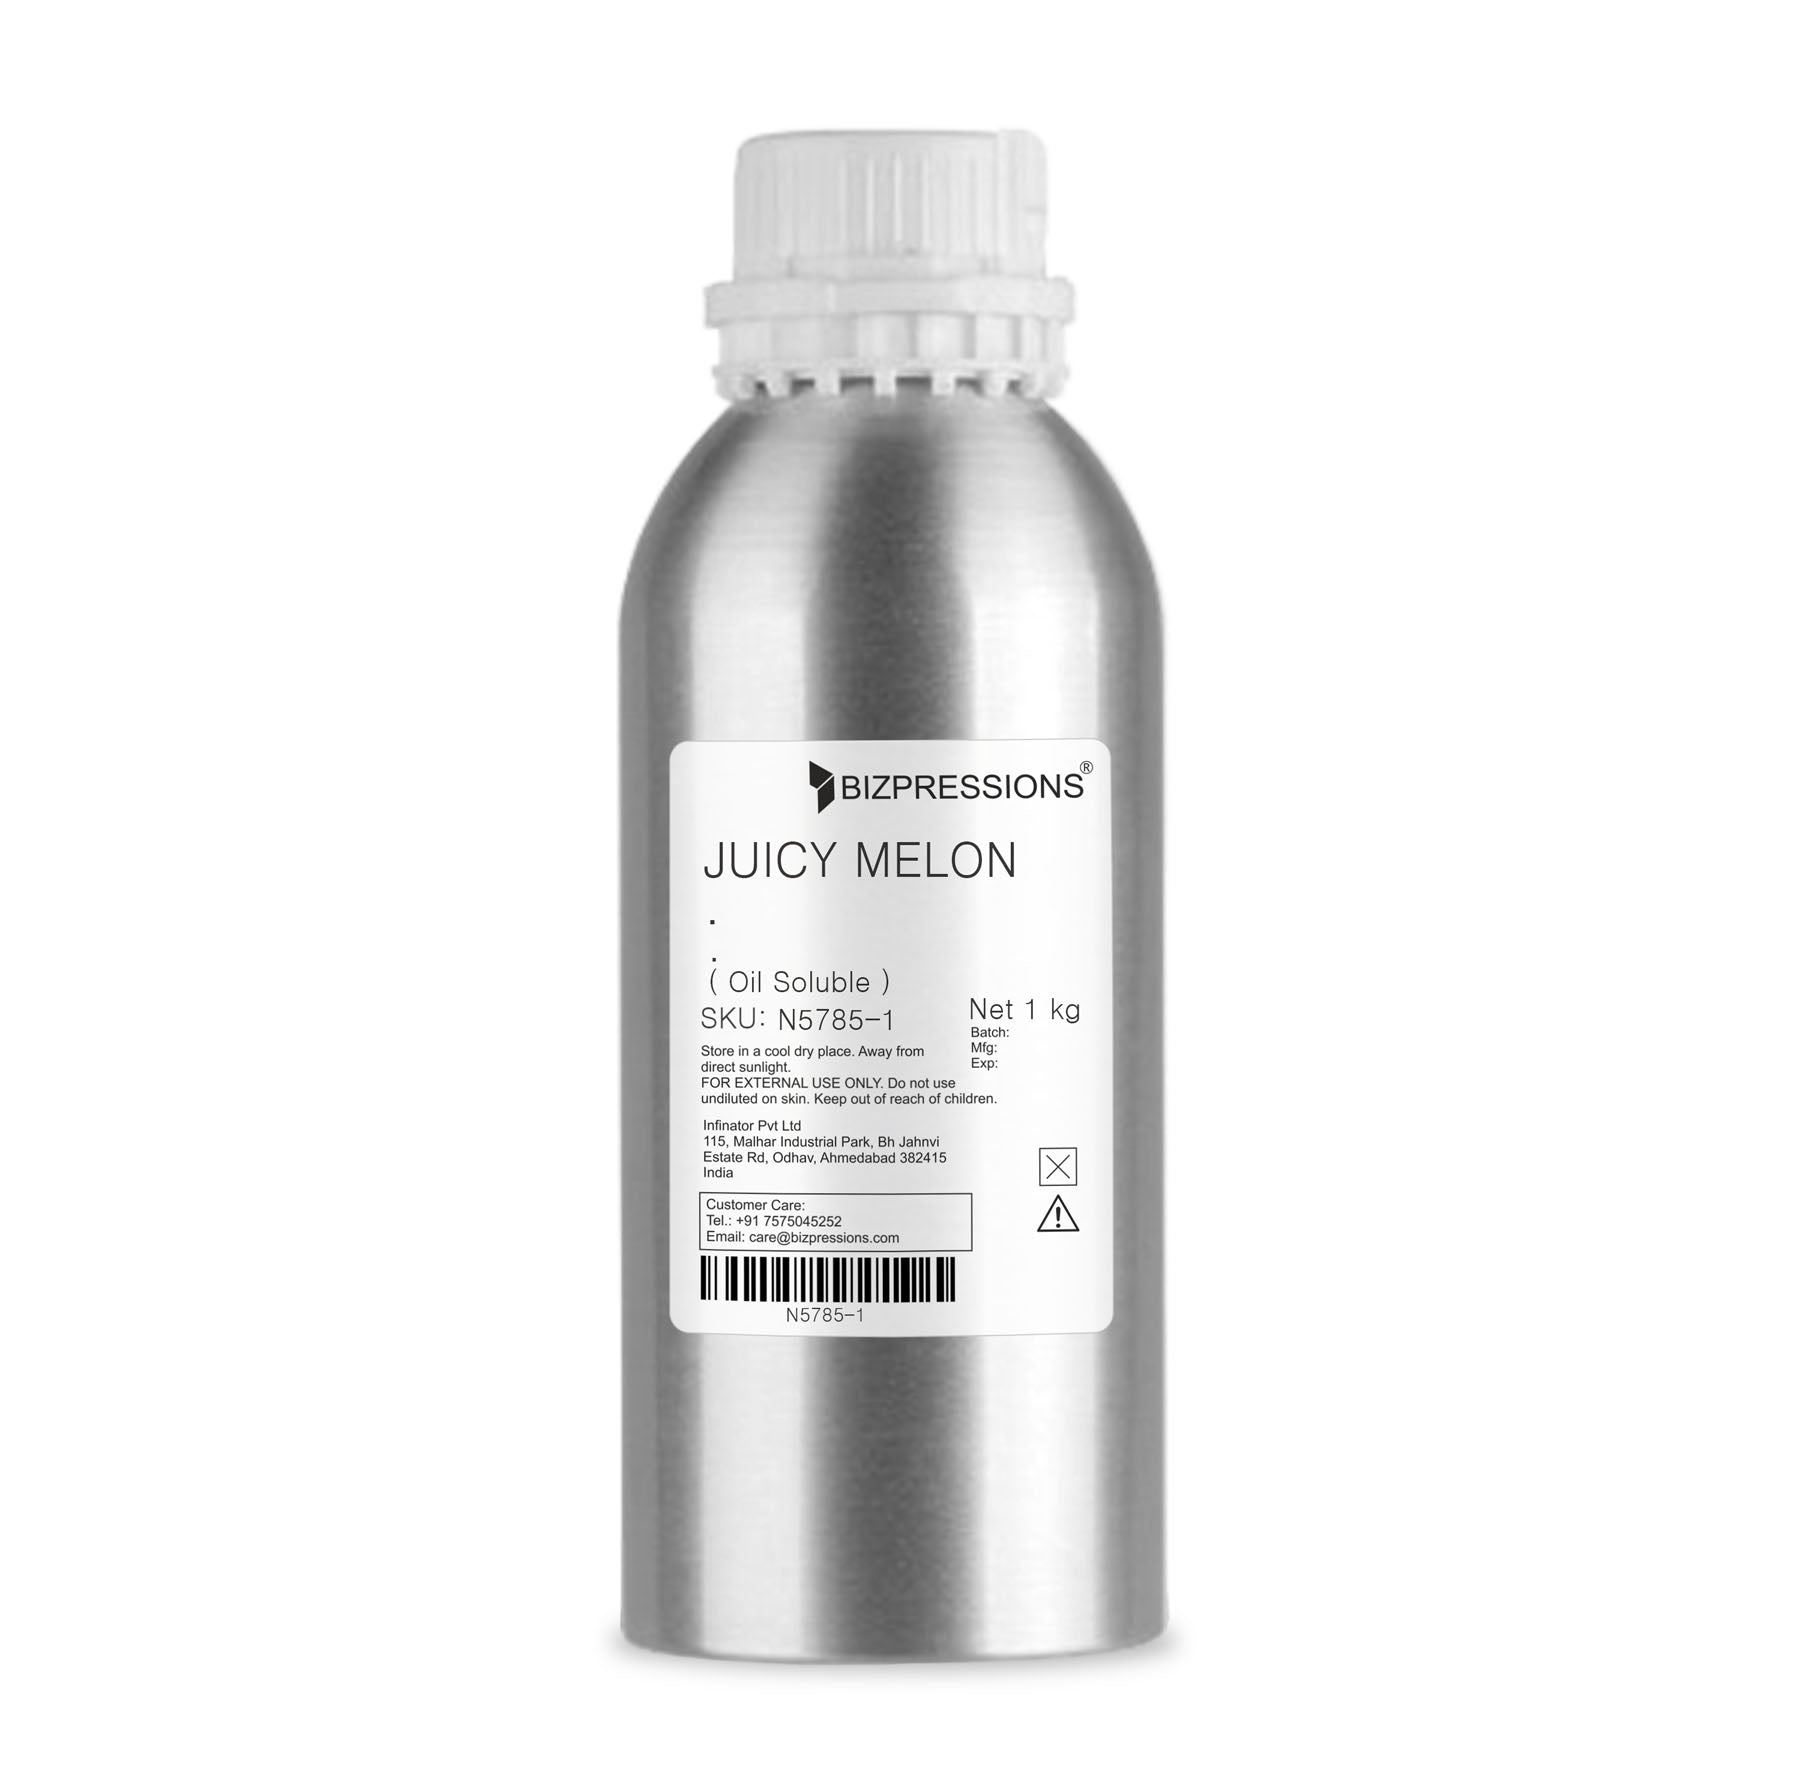 JUICY MELON - Fragrance ( Oil Soluble ) - 1 kg